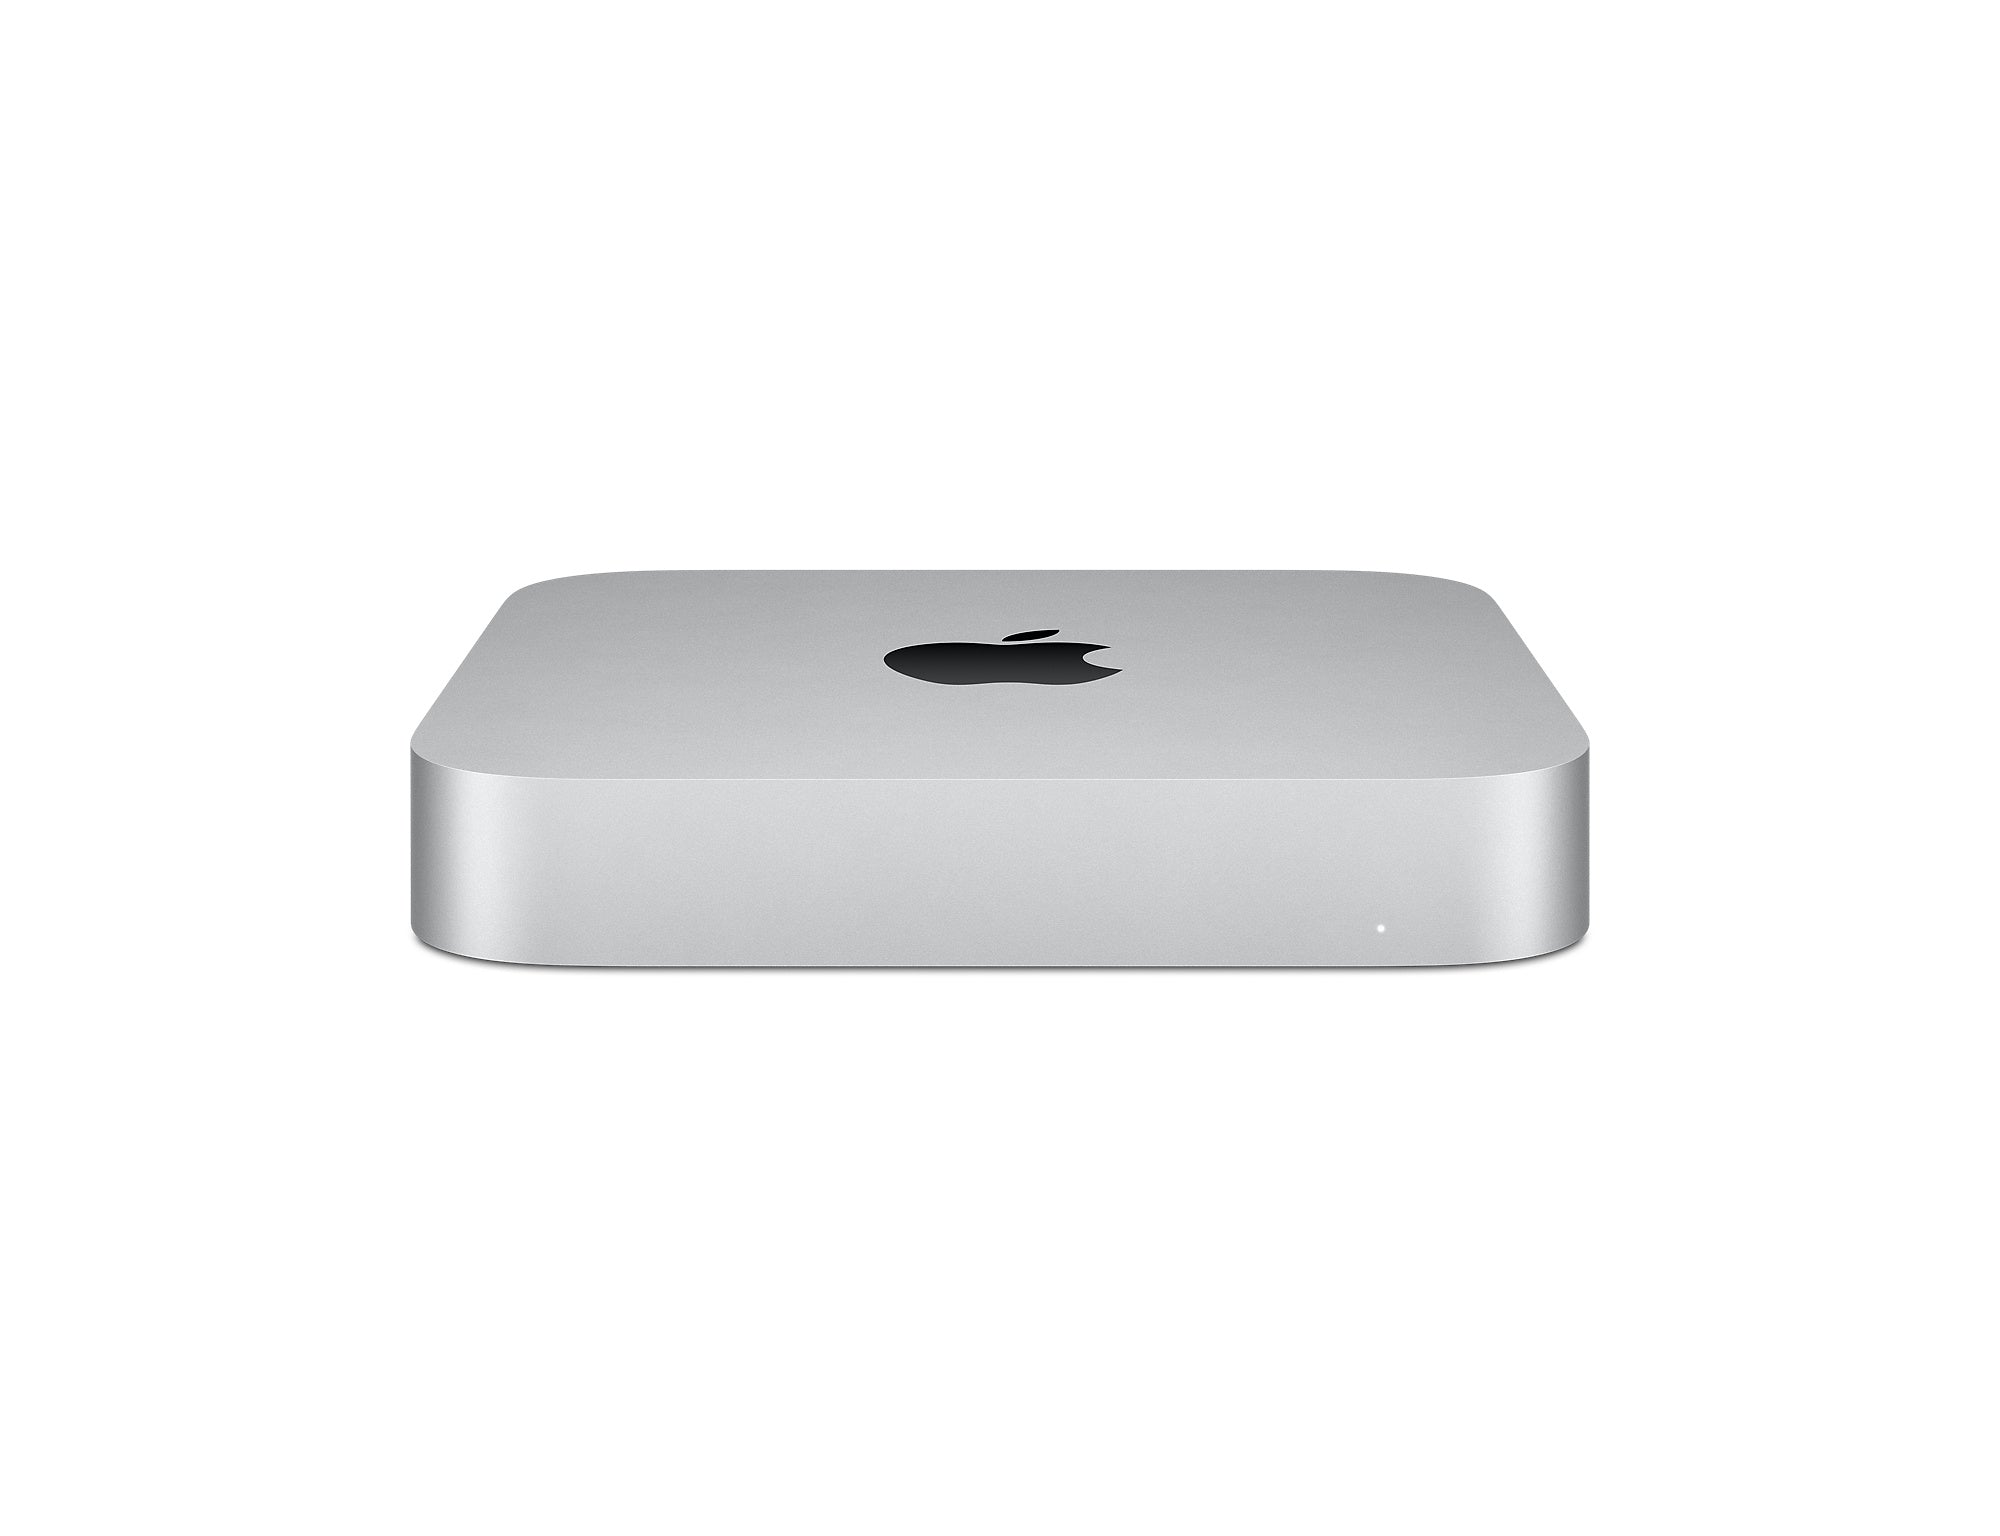 Mac mini: Apple M1 chip with 8 core CPU and 8 core GPU, 256GB SSD - Brand New Open Box